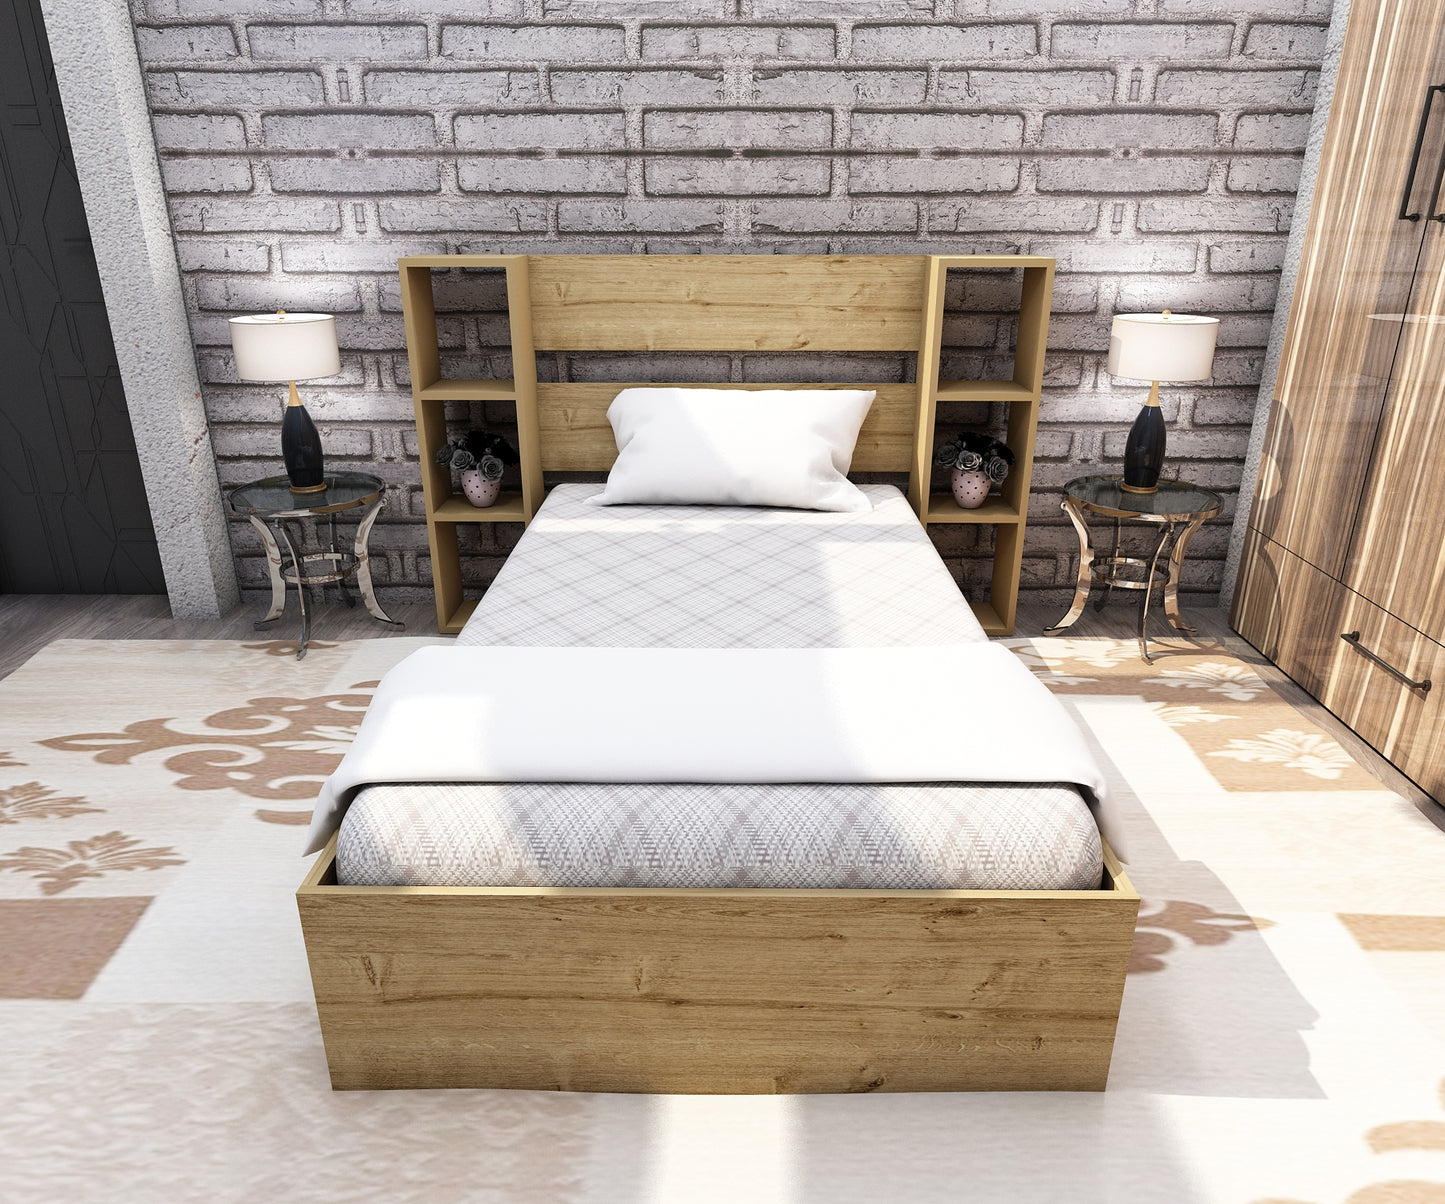 Erica Bedstead Bed Frame with Metal Slats and Storage Shelves